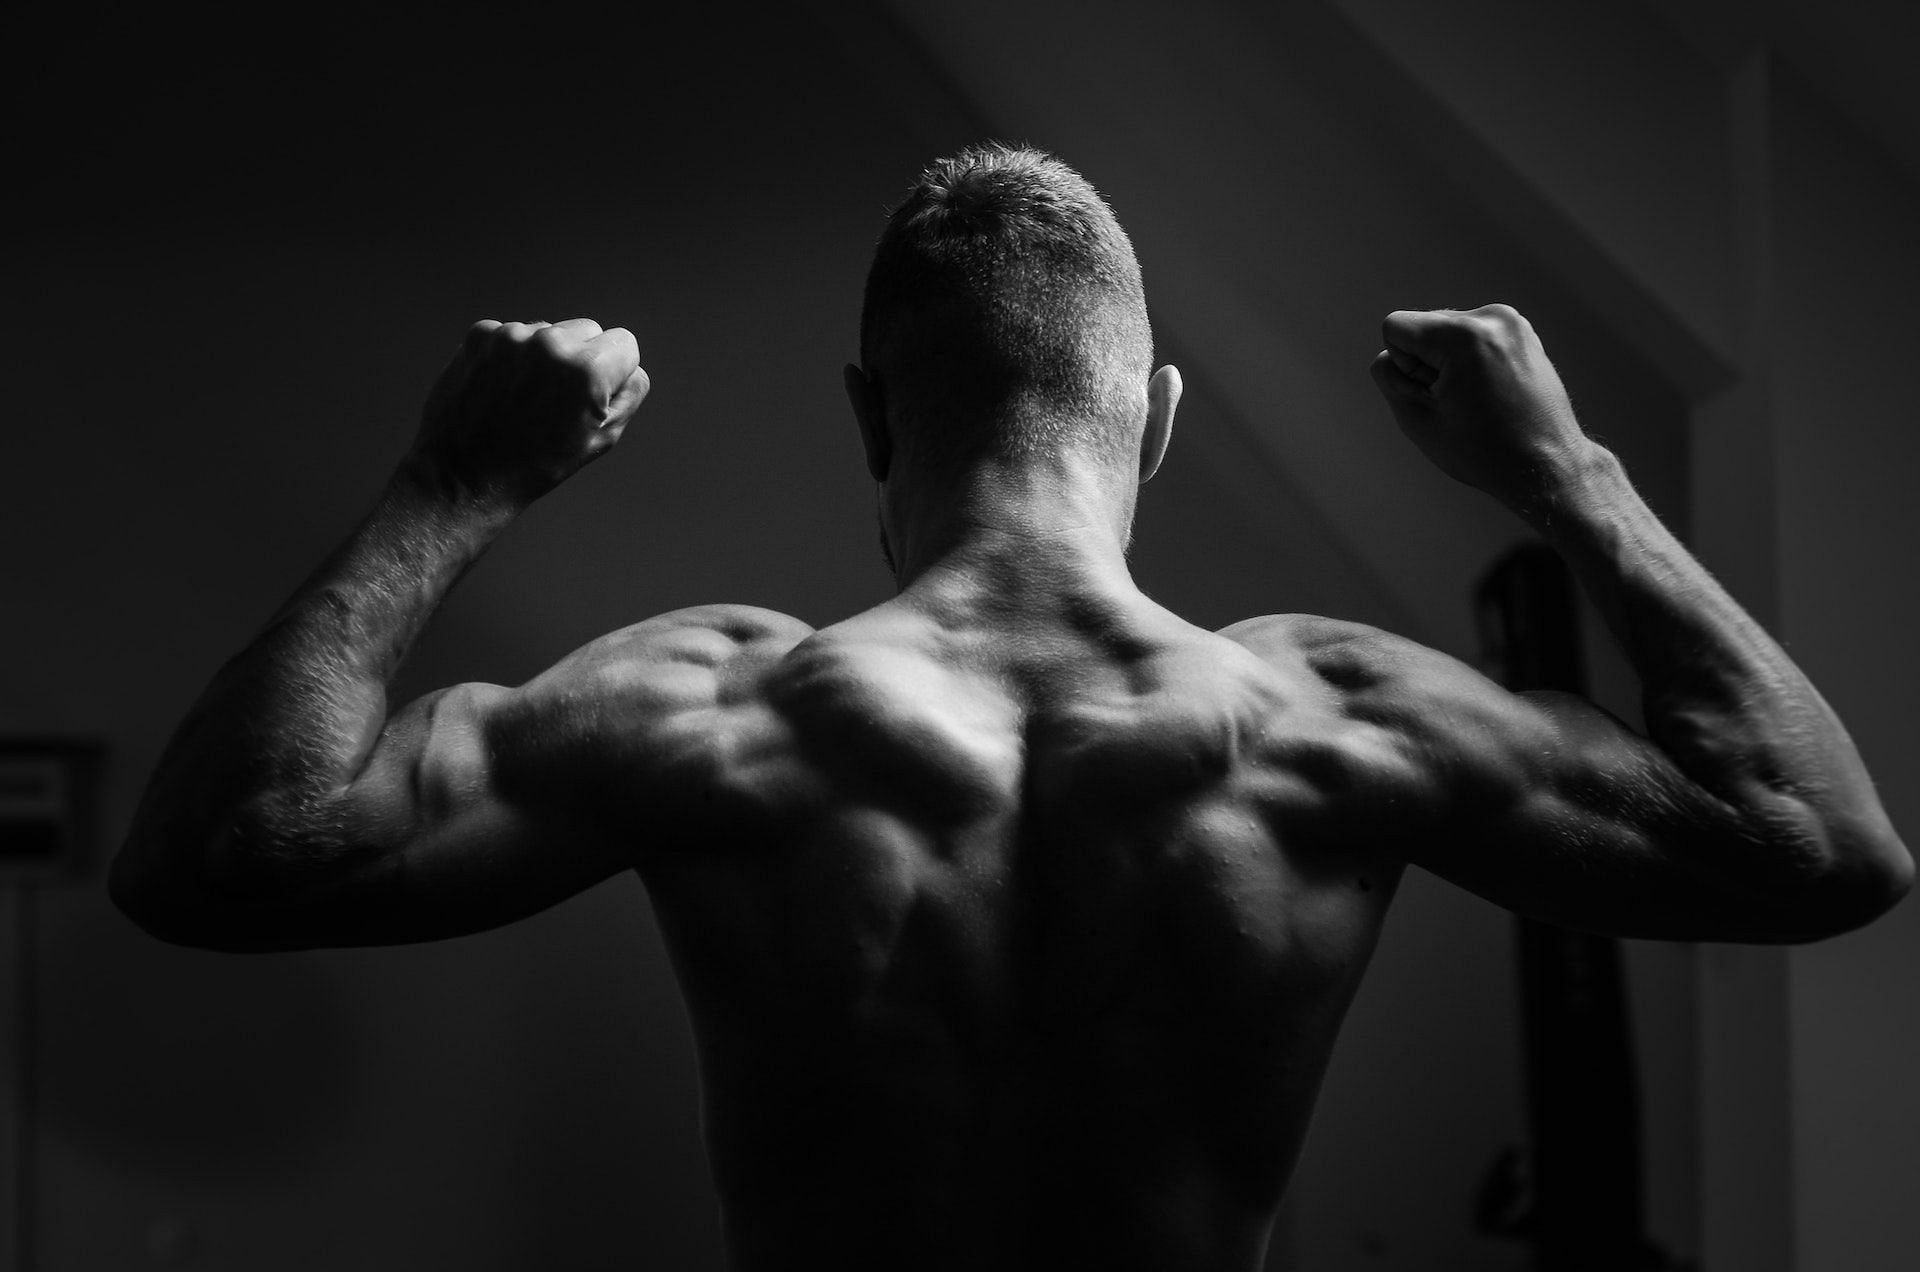 Latissimus dorsi exercises develop back strength and size. (Photo via Pexels/Adrian Stancu)